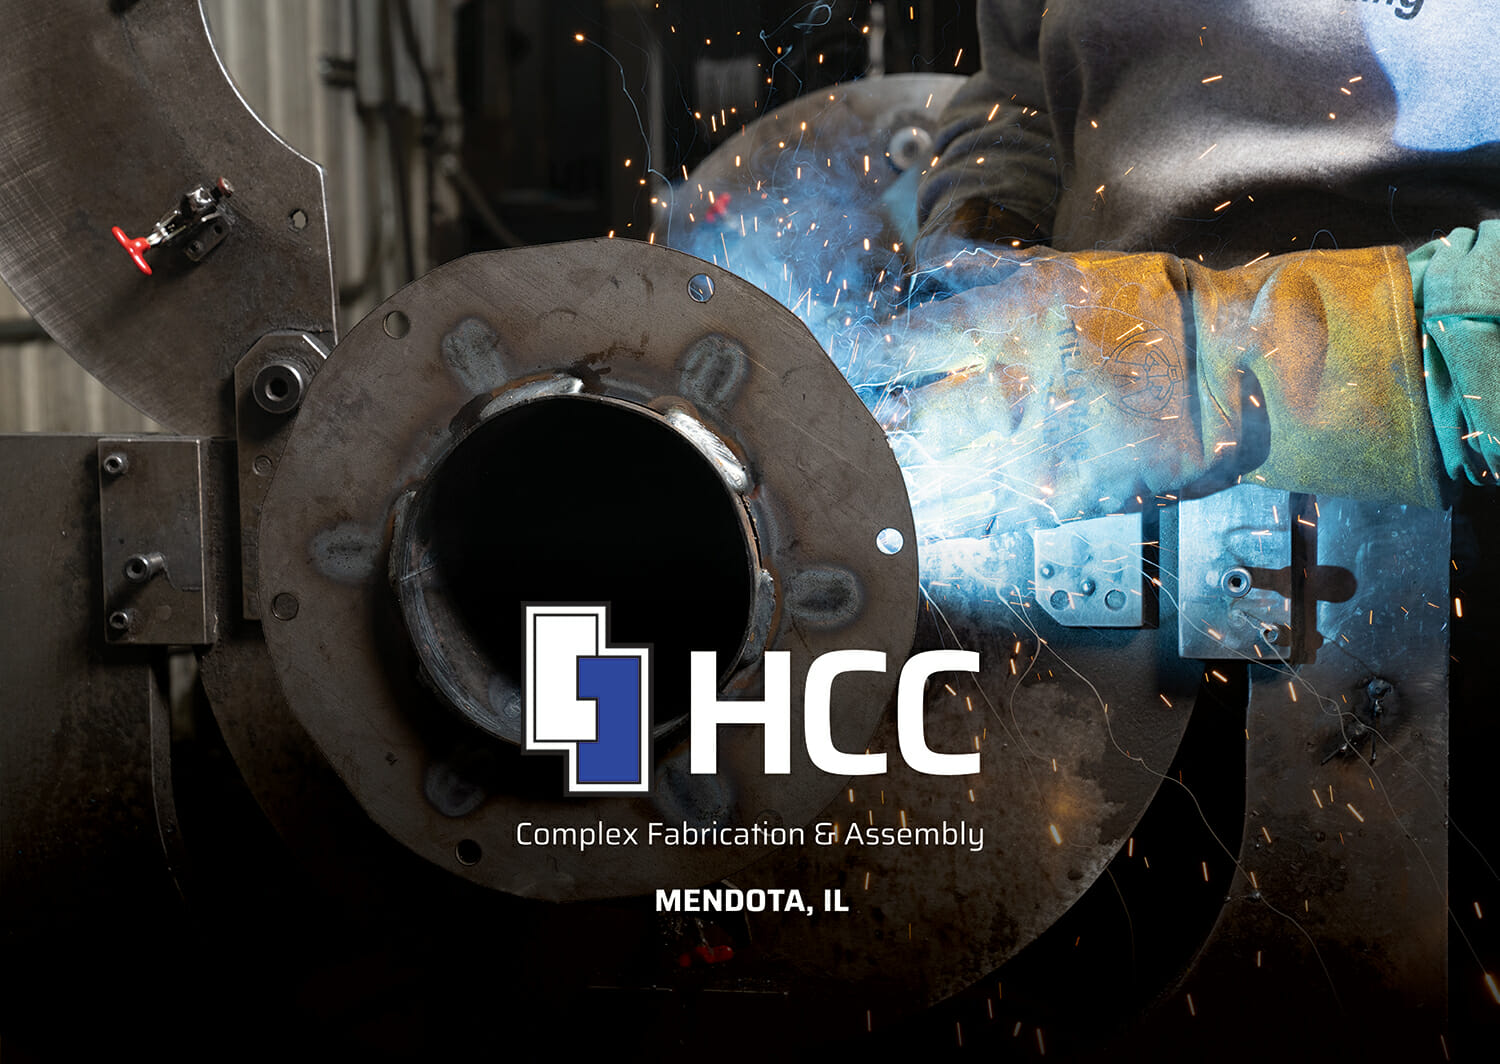 HCC - Complex Fabrication & Assembly - Mendota, IL